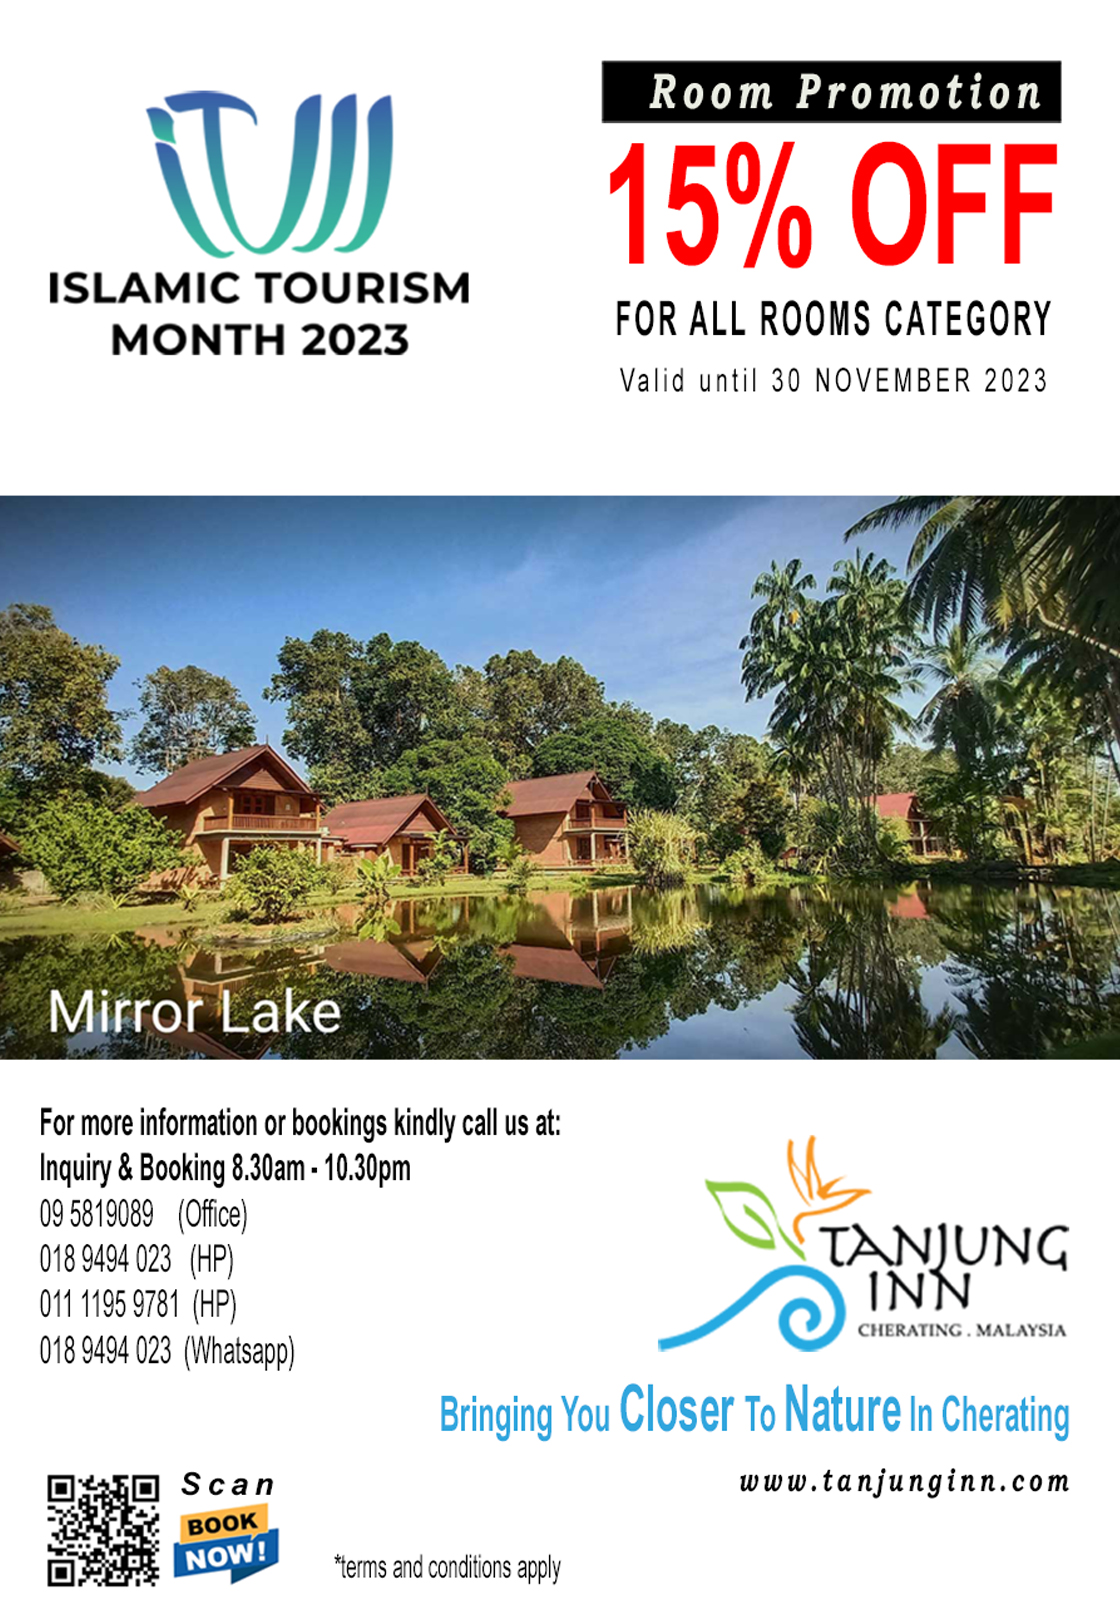 Tanjung Inn Cherating